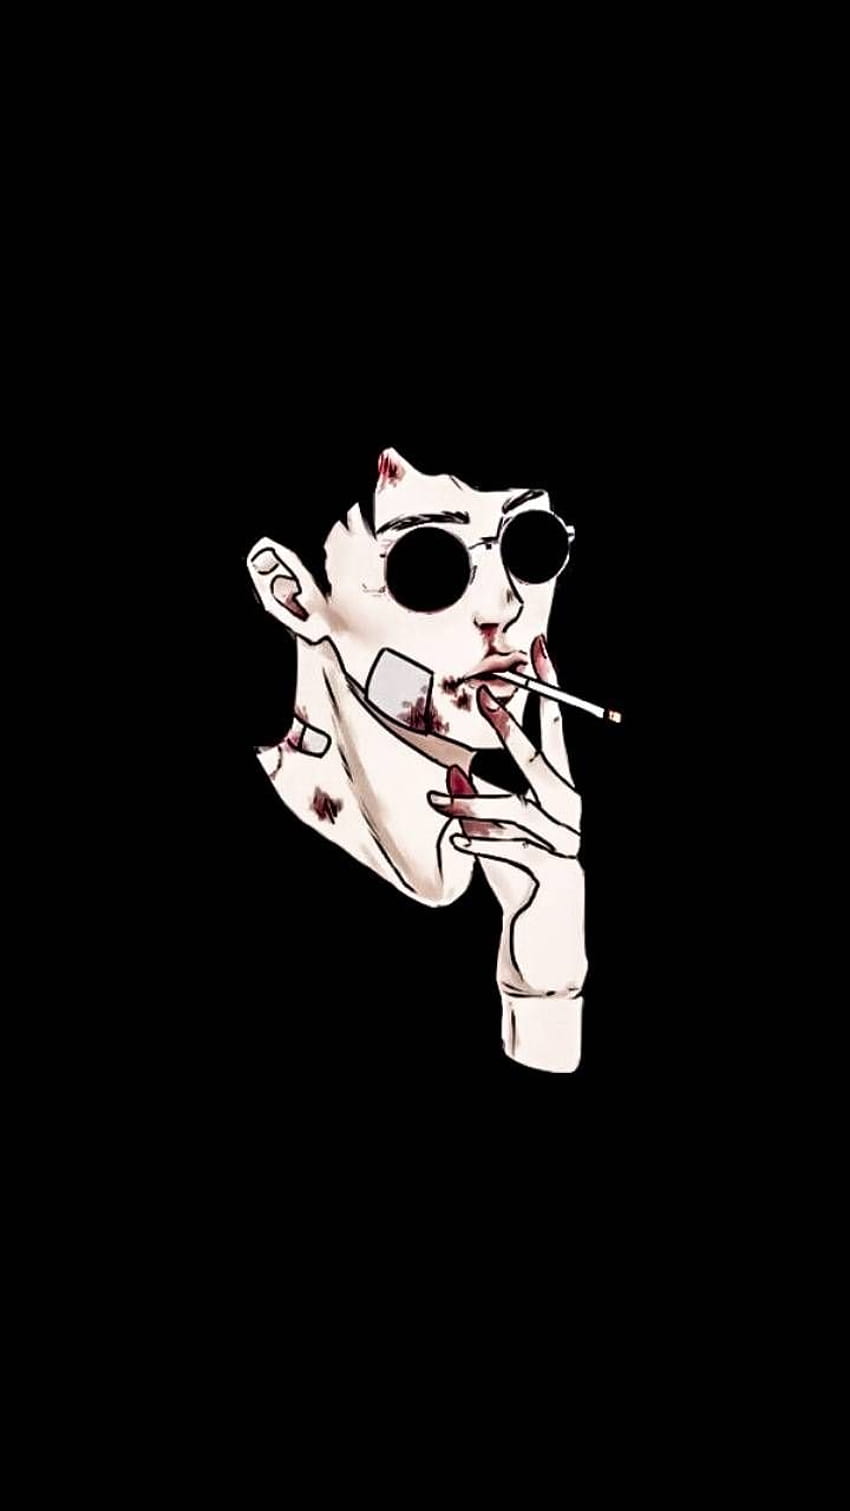 Bad Boy For Mobile, bad boy smoking HD phone wallpaper